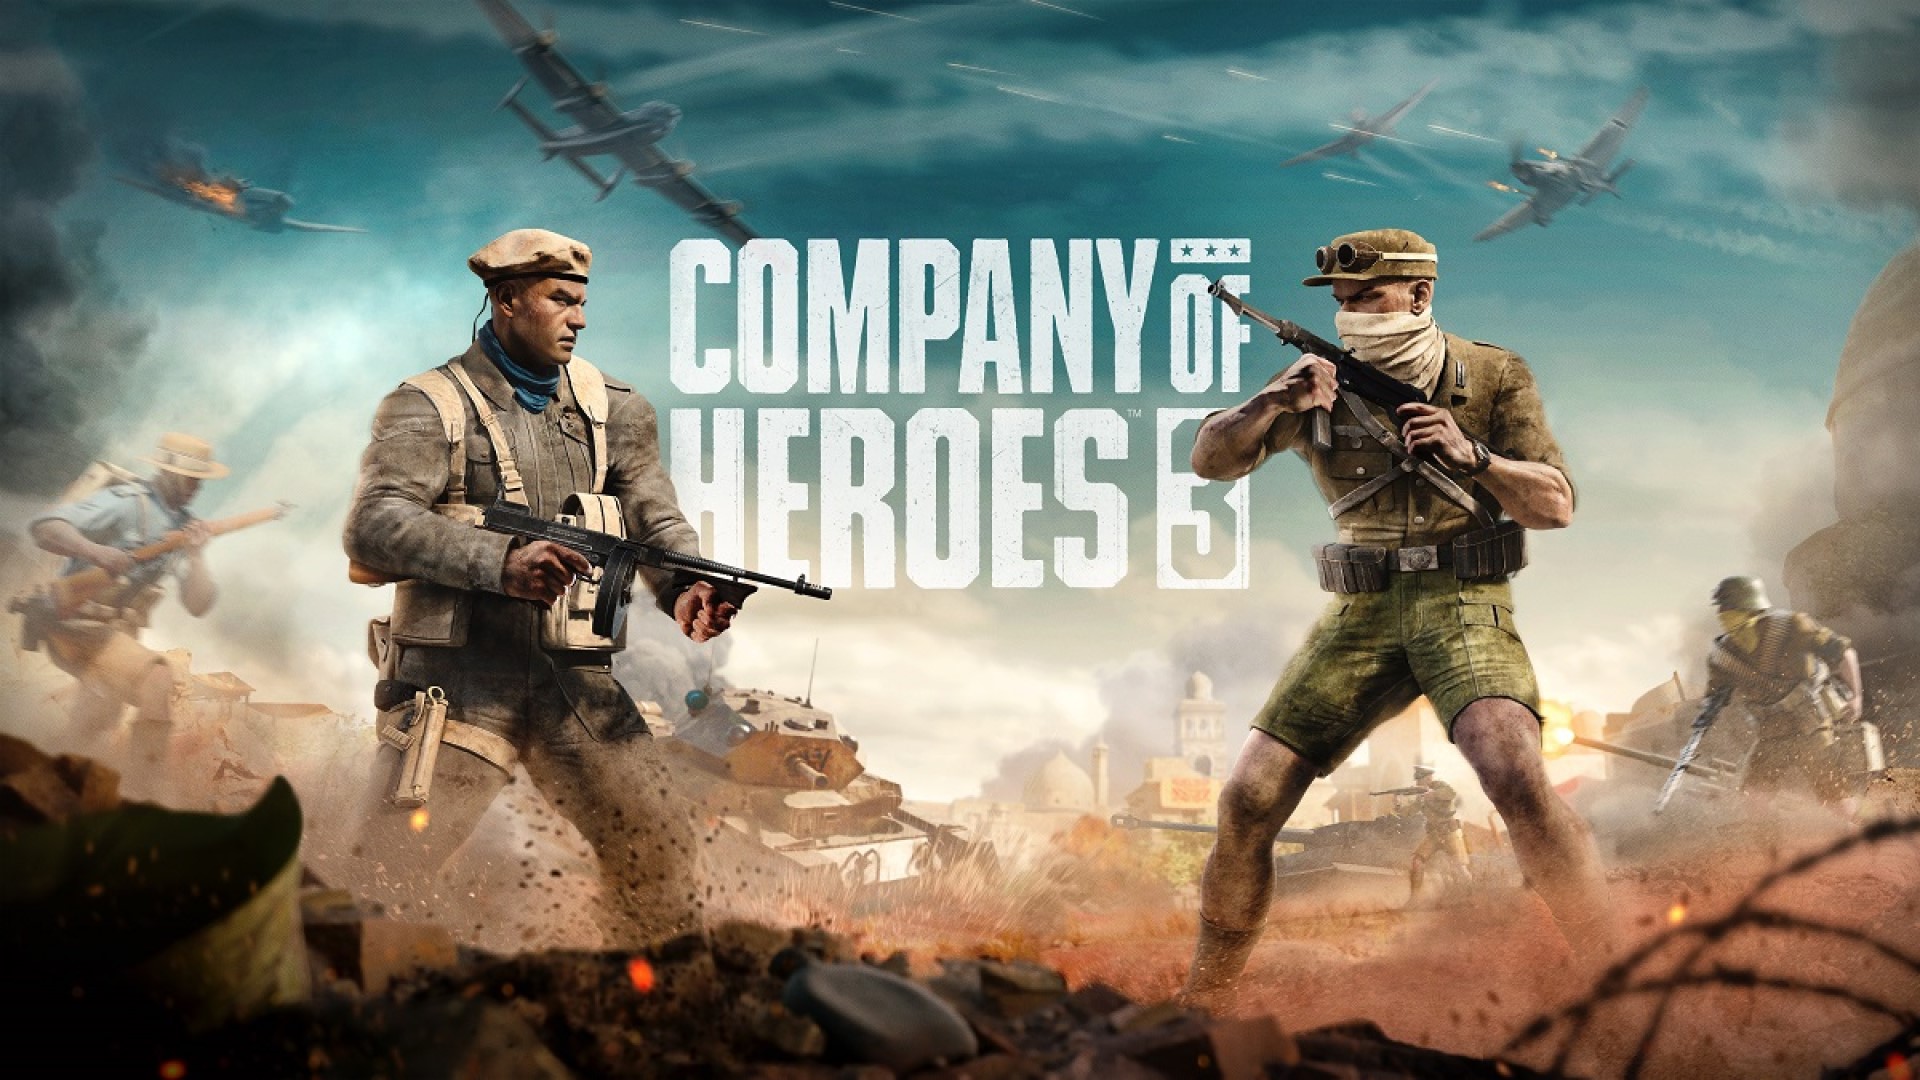 Company of Heroes 3 วางจำหน่ายเพิ่มแล้วบนคอนโซล ทั้ง PS5 และ Xbox Series X/S